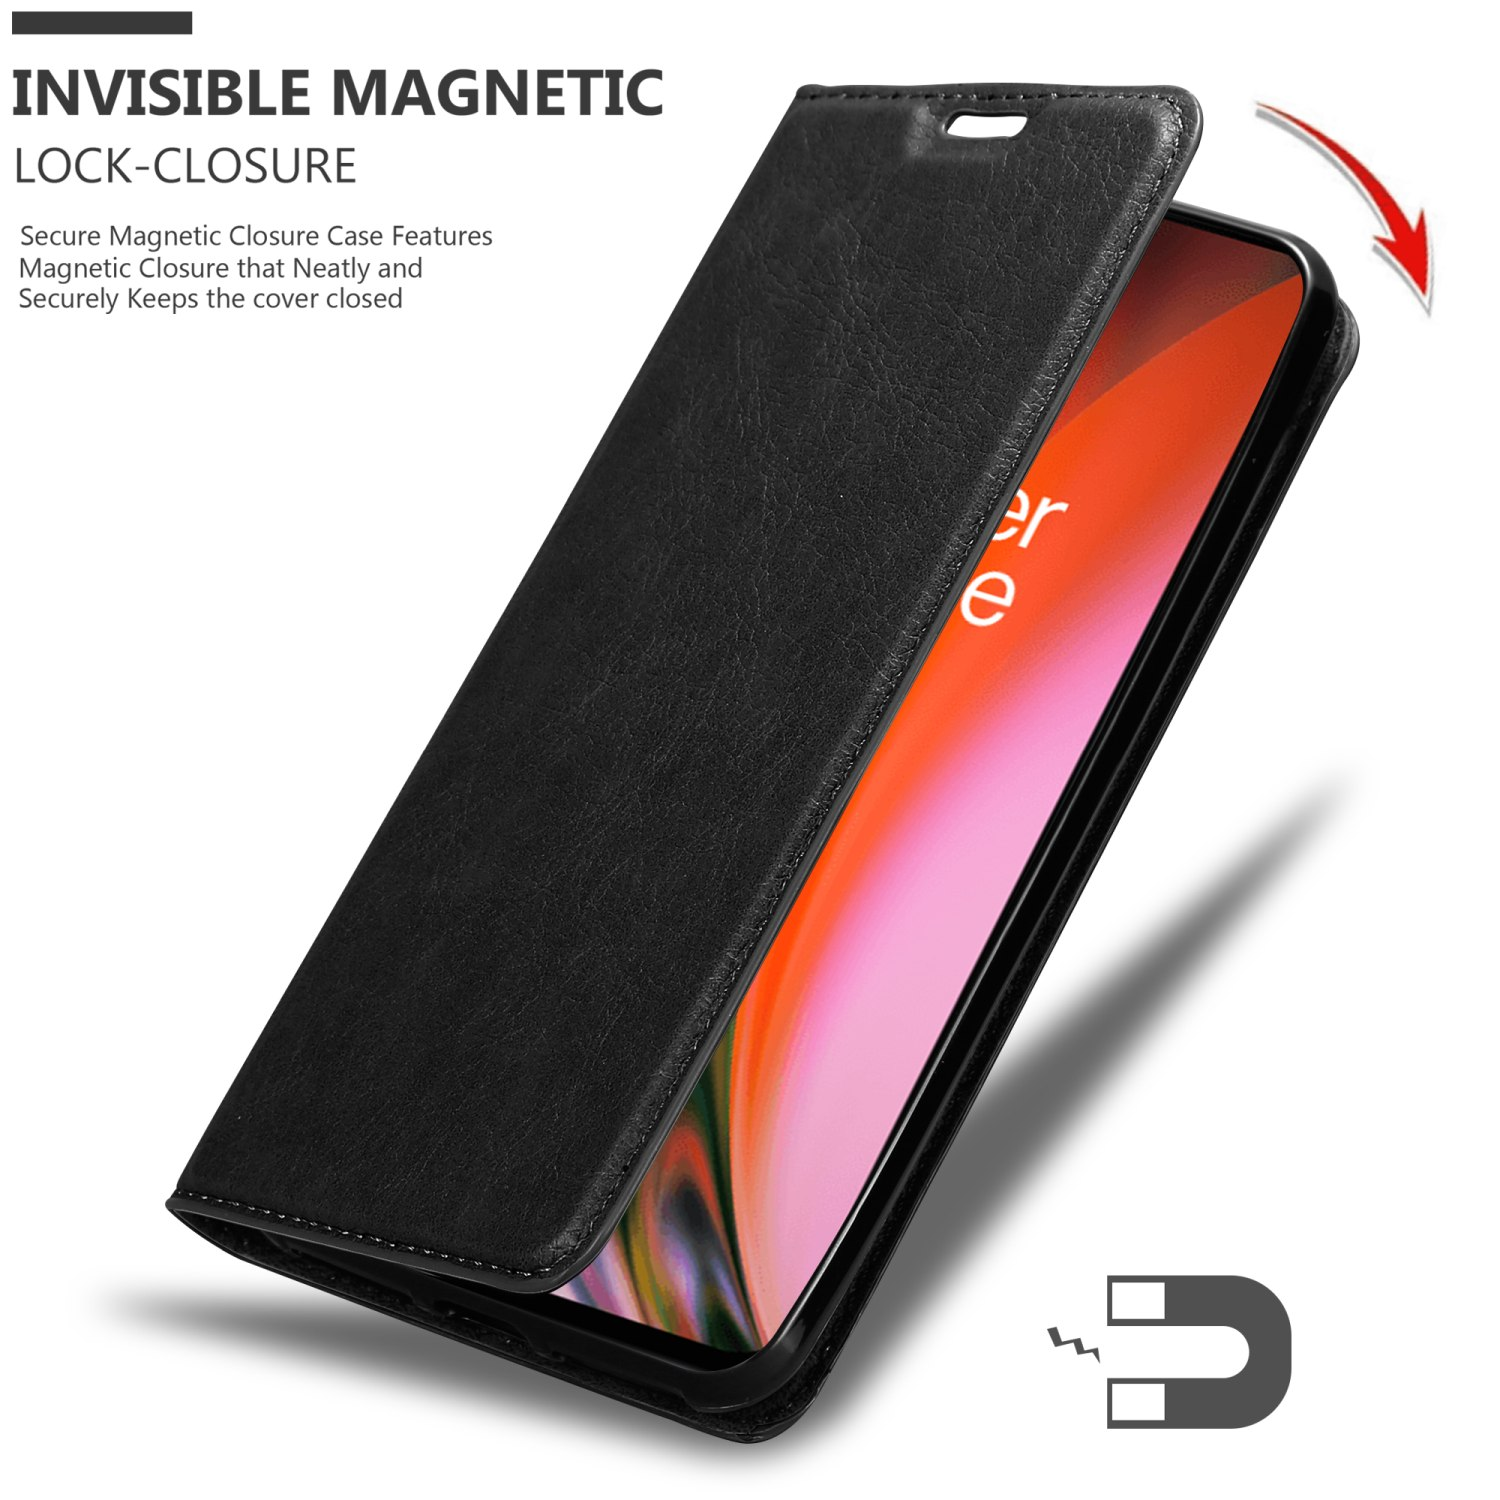 Magnet, NACHT Invisible Book CADORABO 5G, Nord Bookcover, OnePlus, SCHWARZ Hülle 2